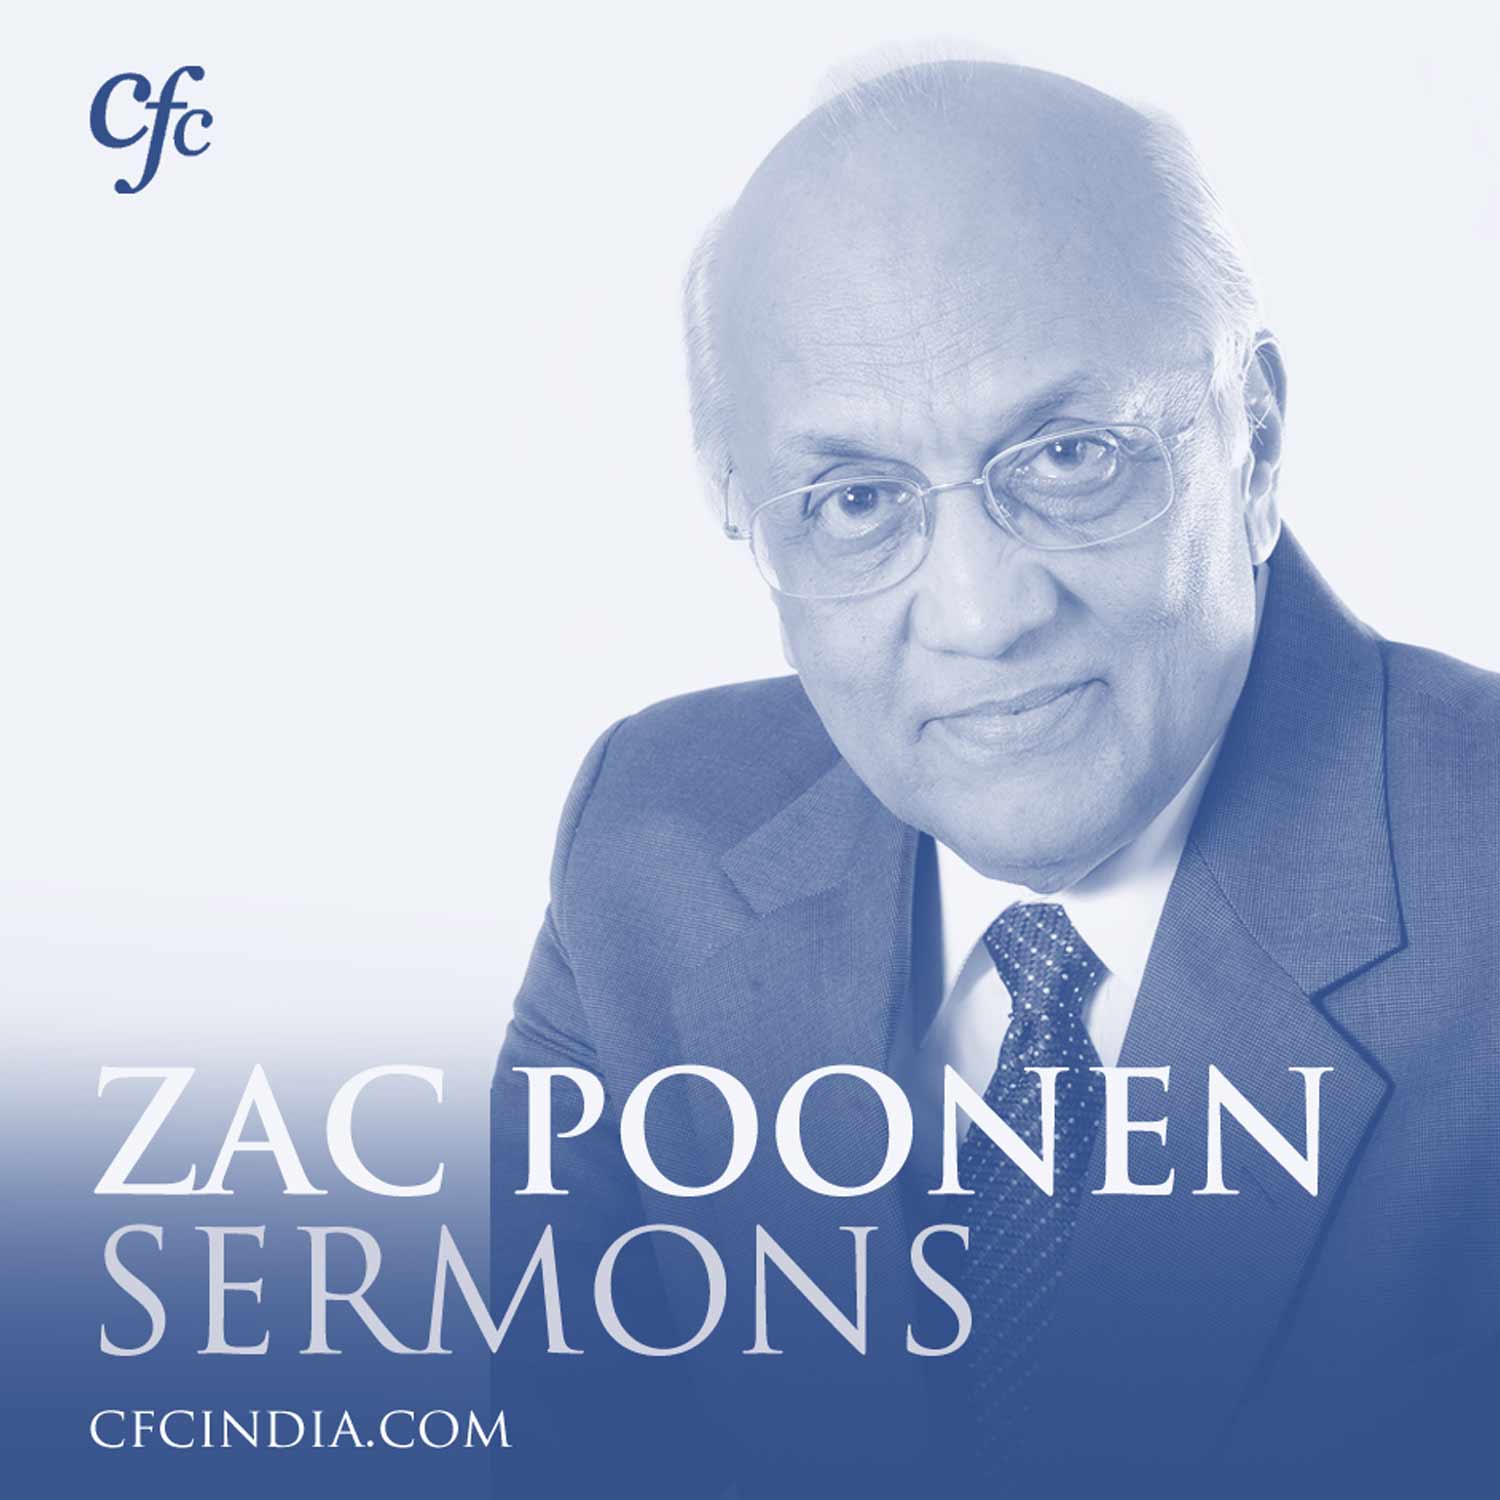 Zac Poonen Sermons